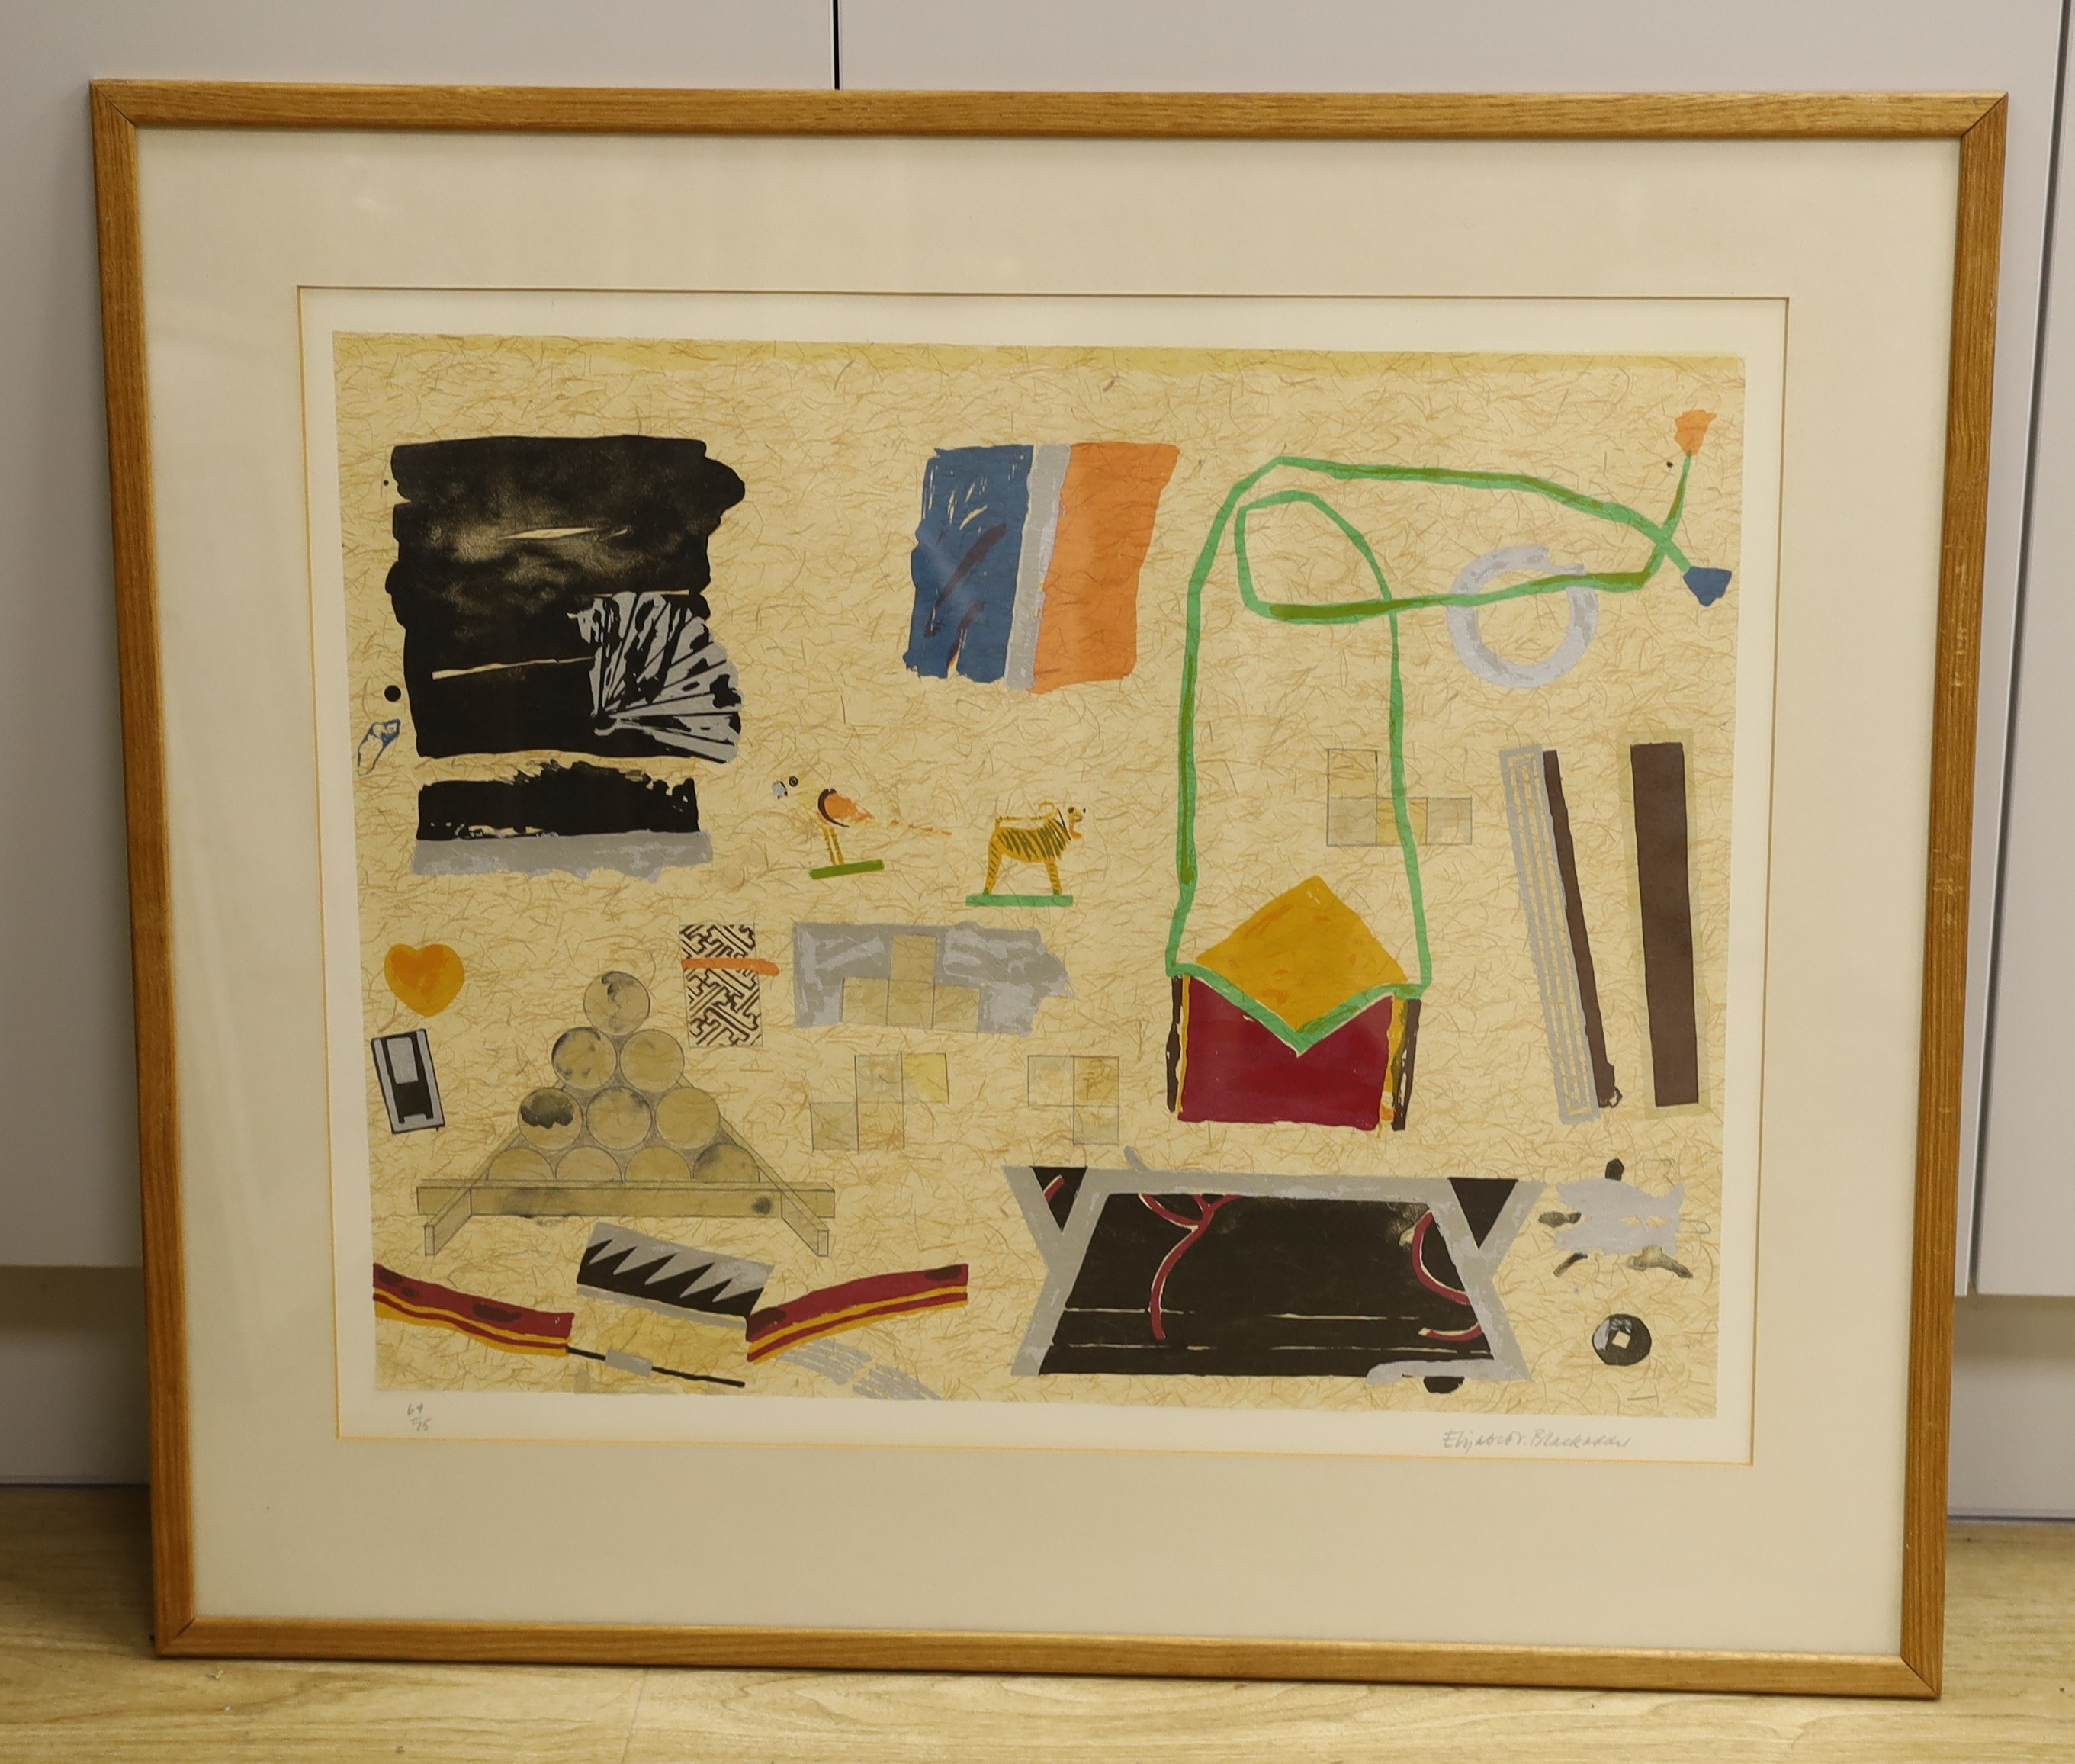 Elizabeth Blackadder (1931-), lithograph on papyrus, Still life, signed in pencil, 64/75, 46 x 58cm